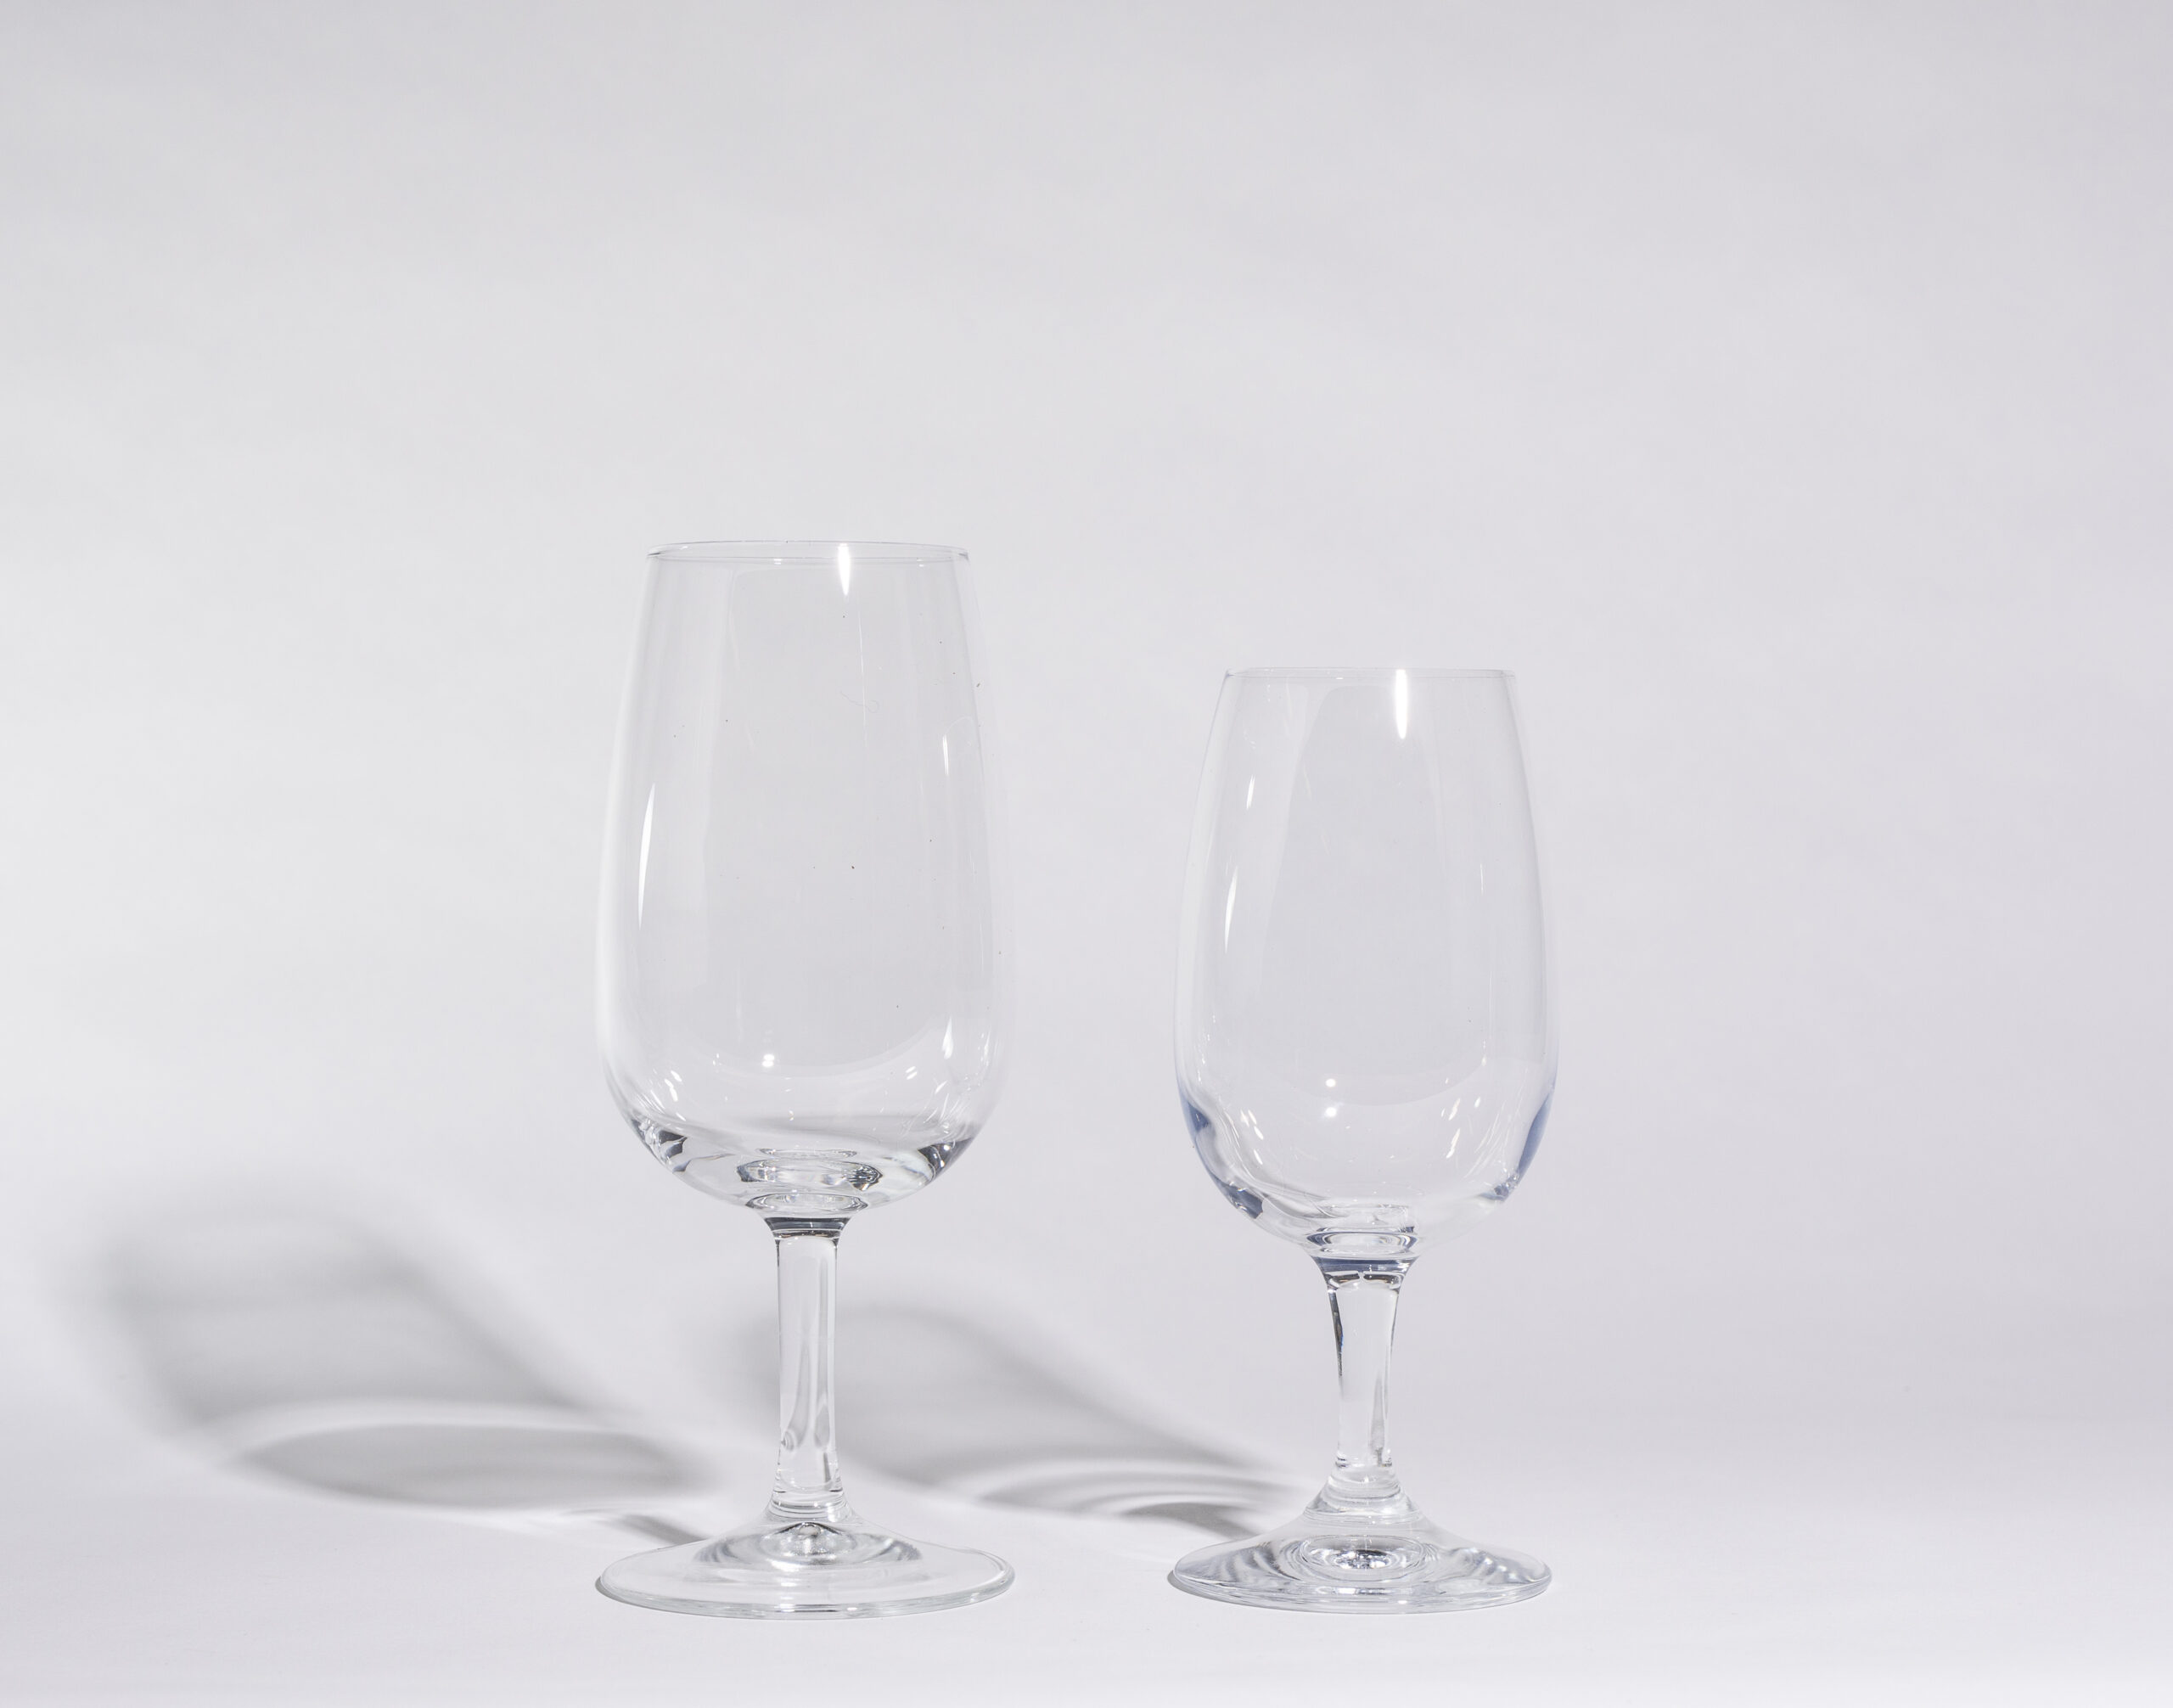 Wine tasting glasses (10 or 7oz, stemmed)